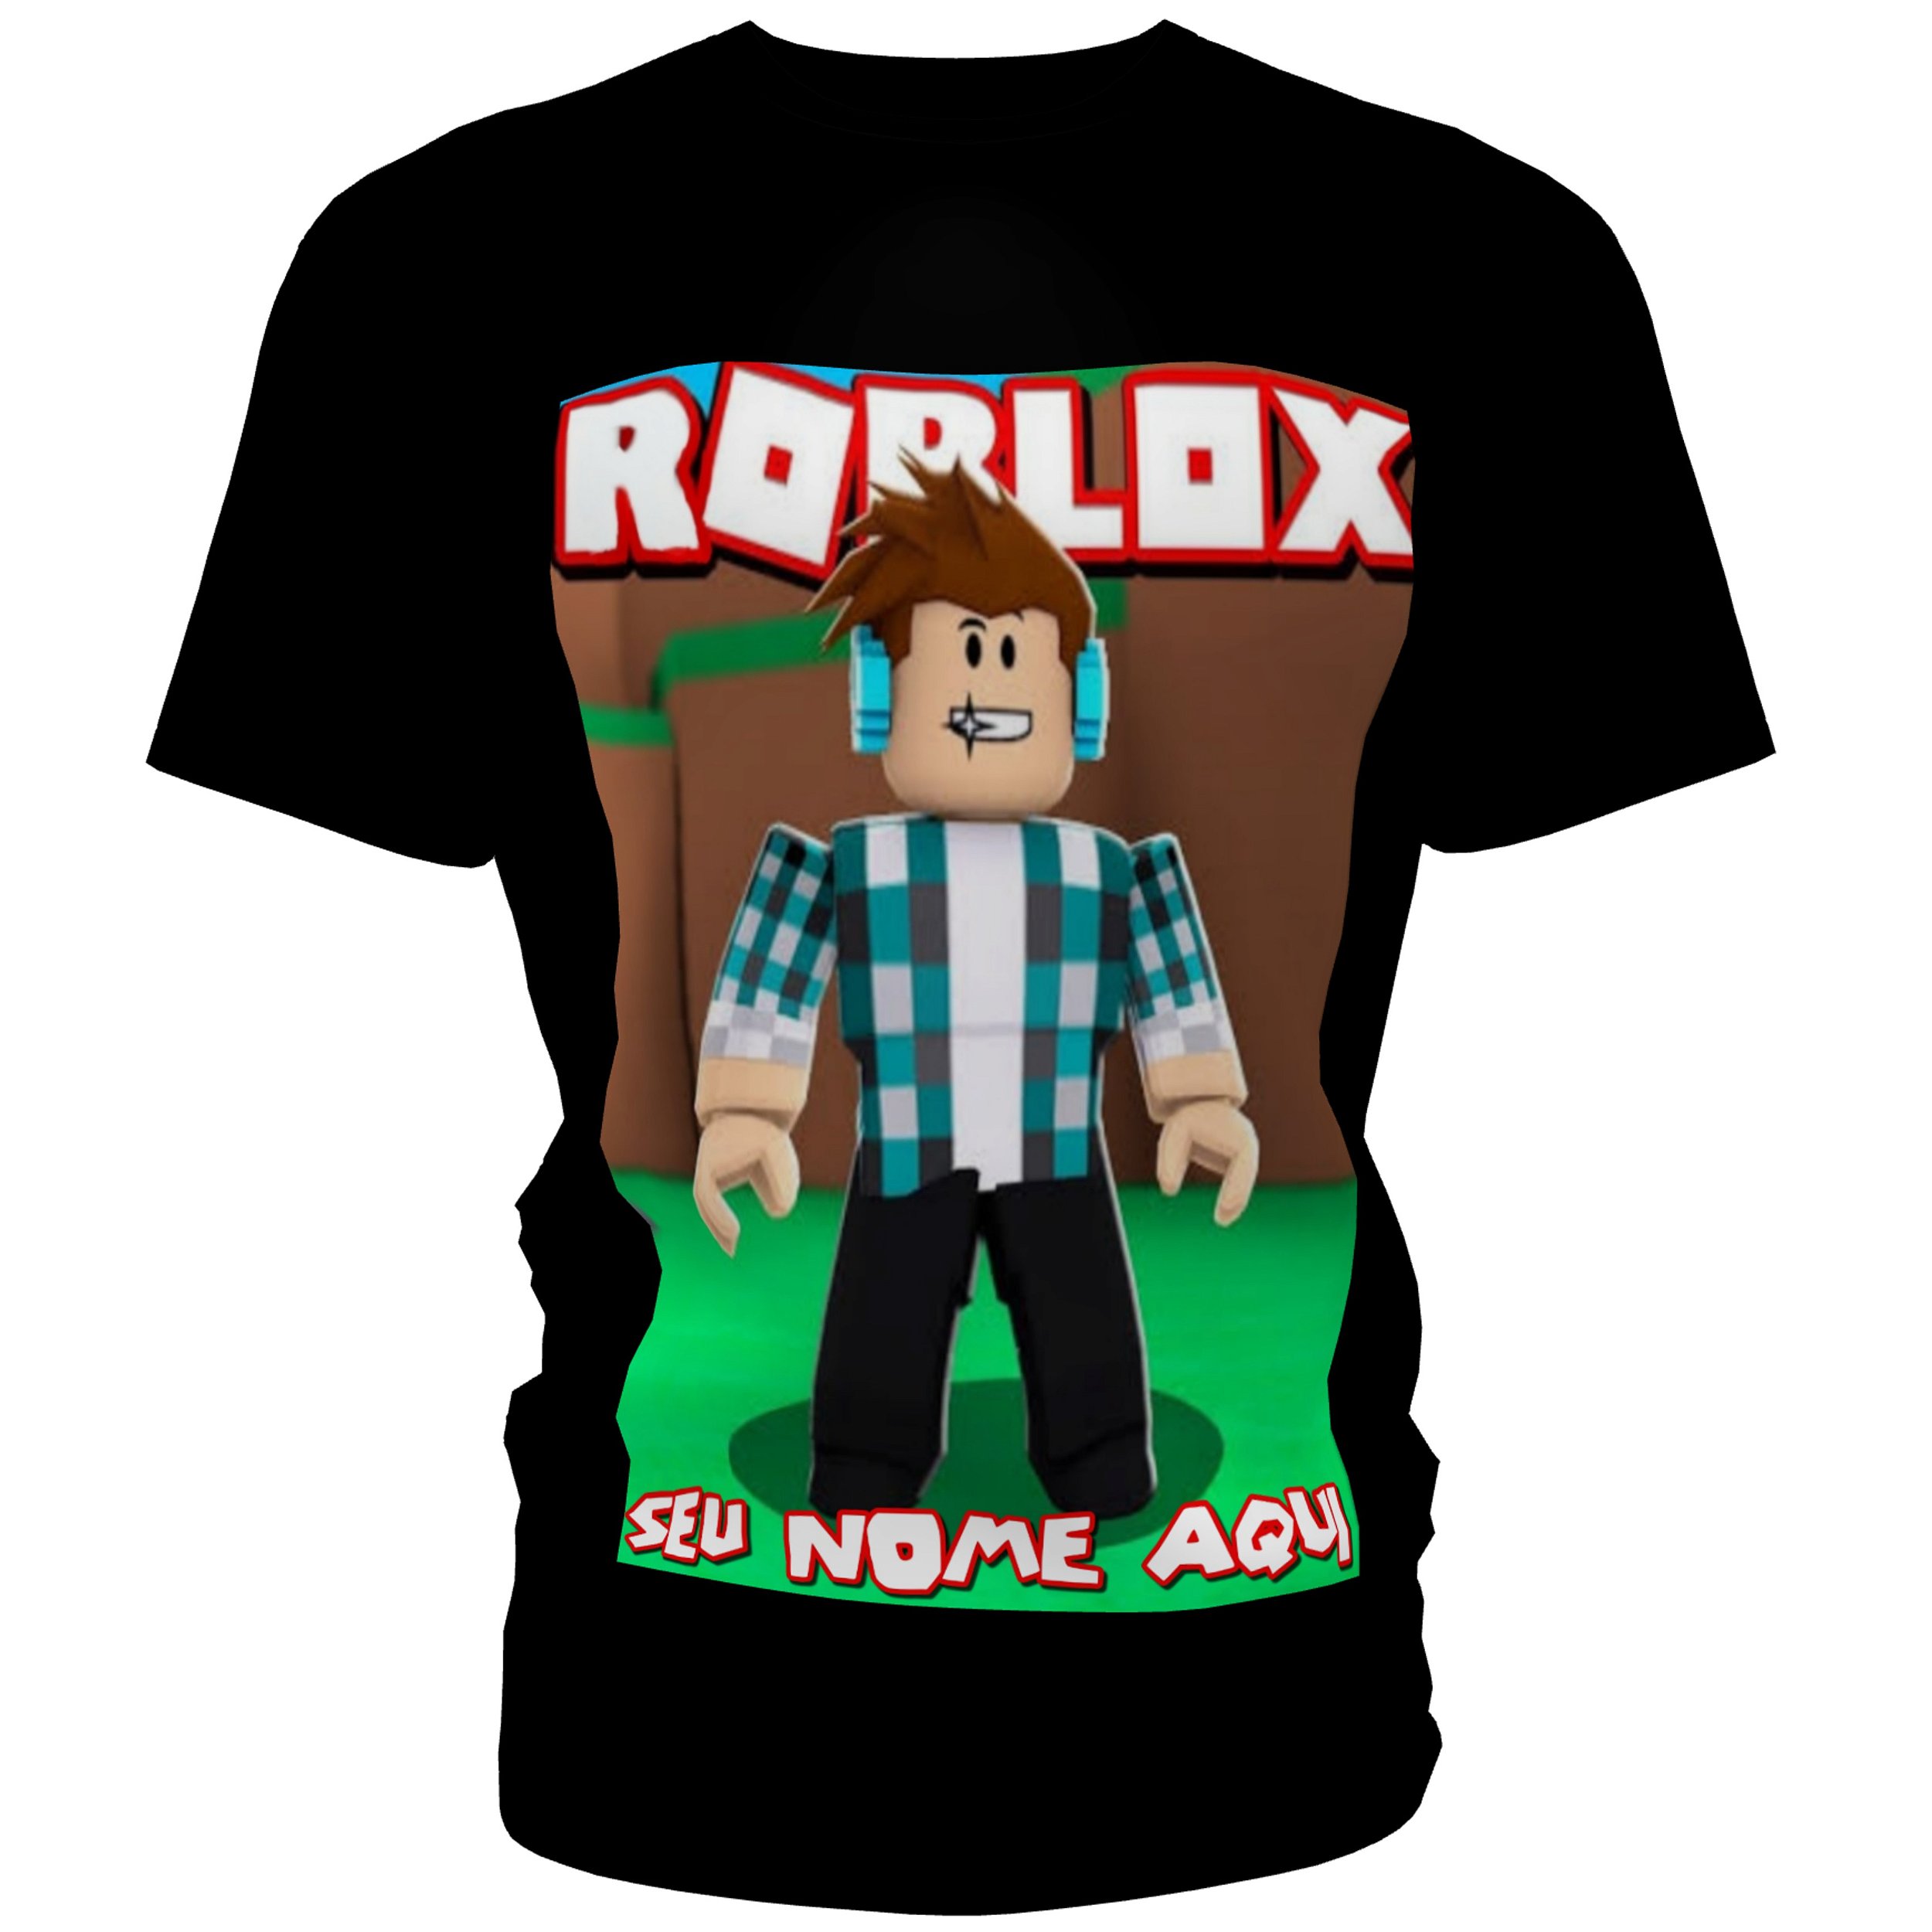 2 Camisetas Jogo Roblox Infantil